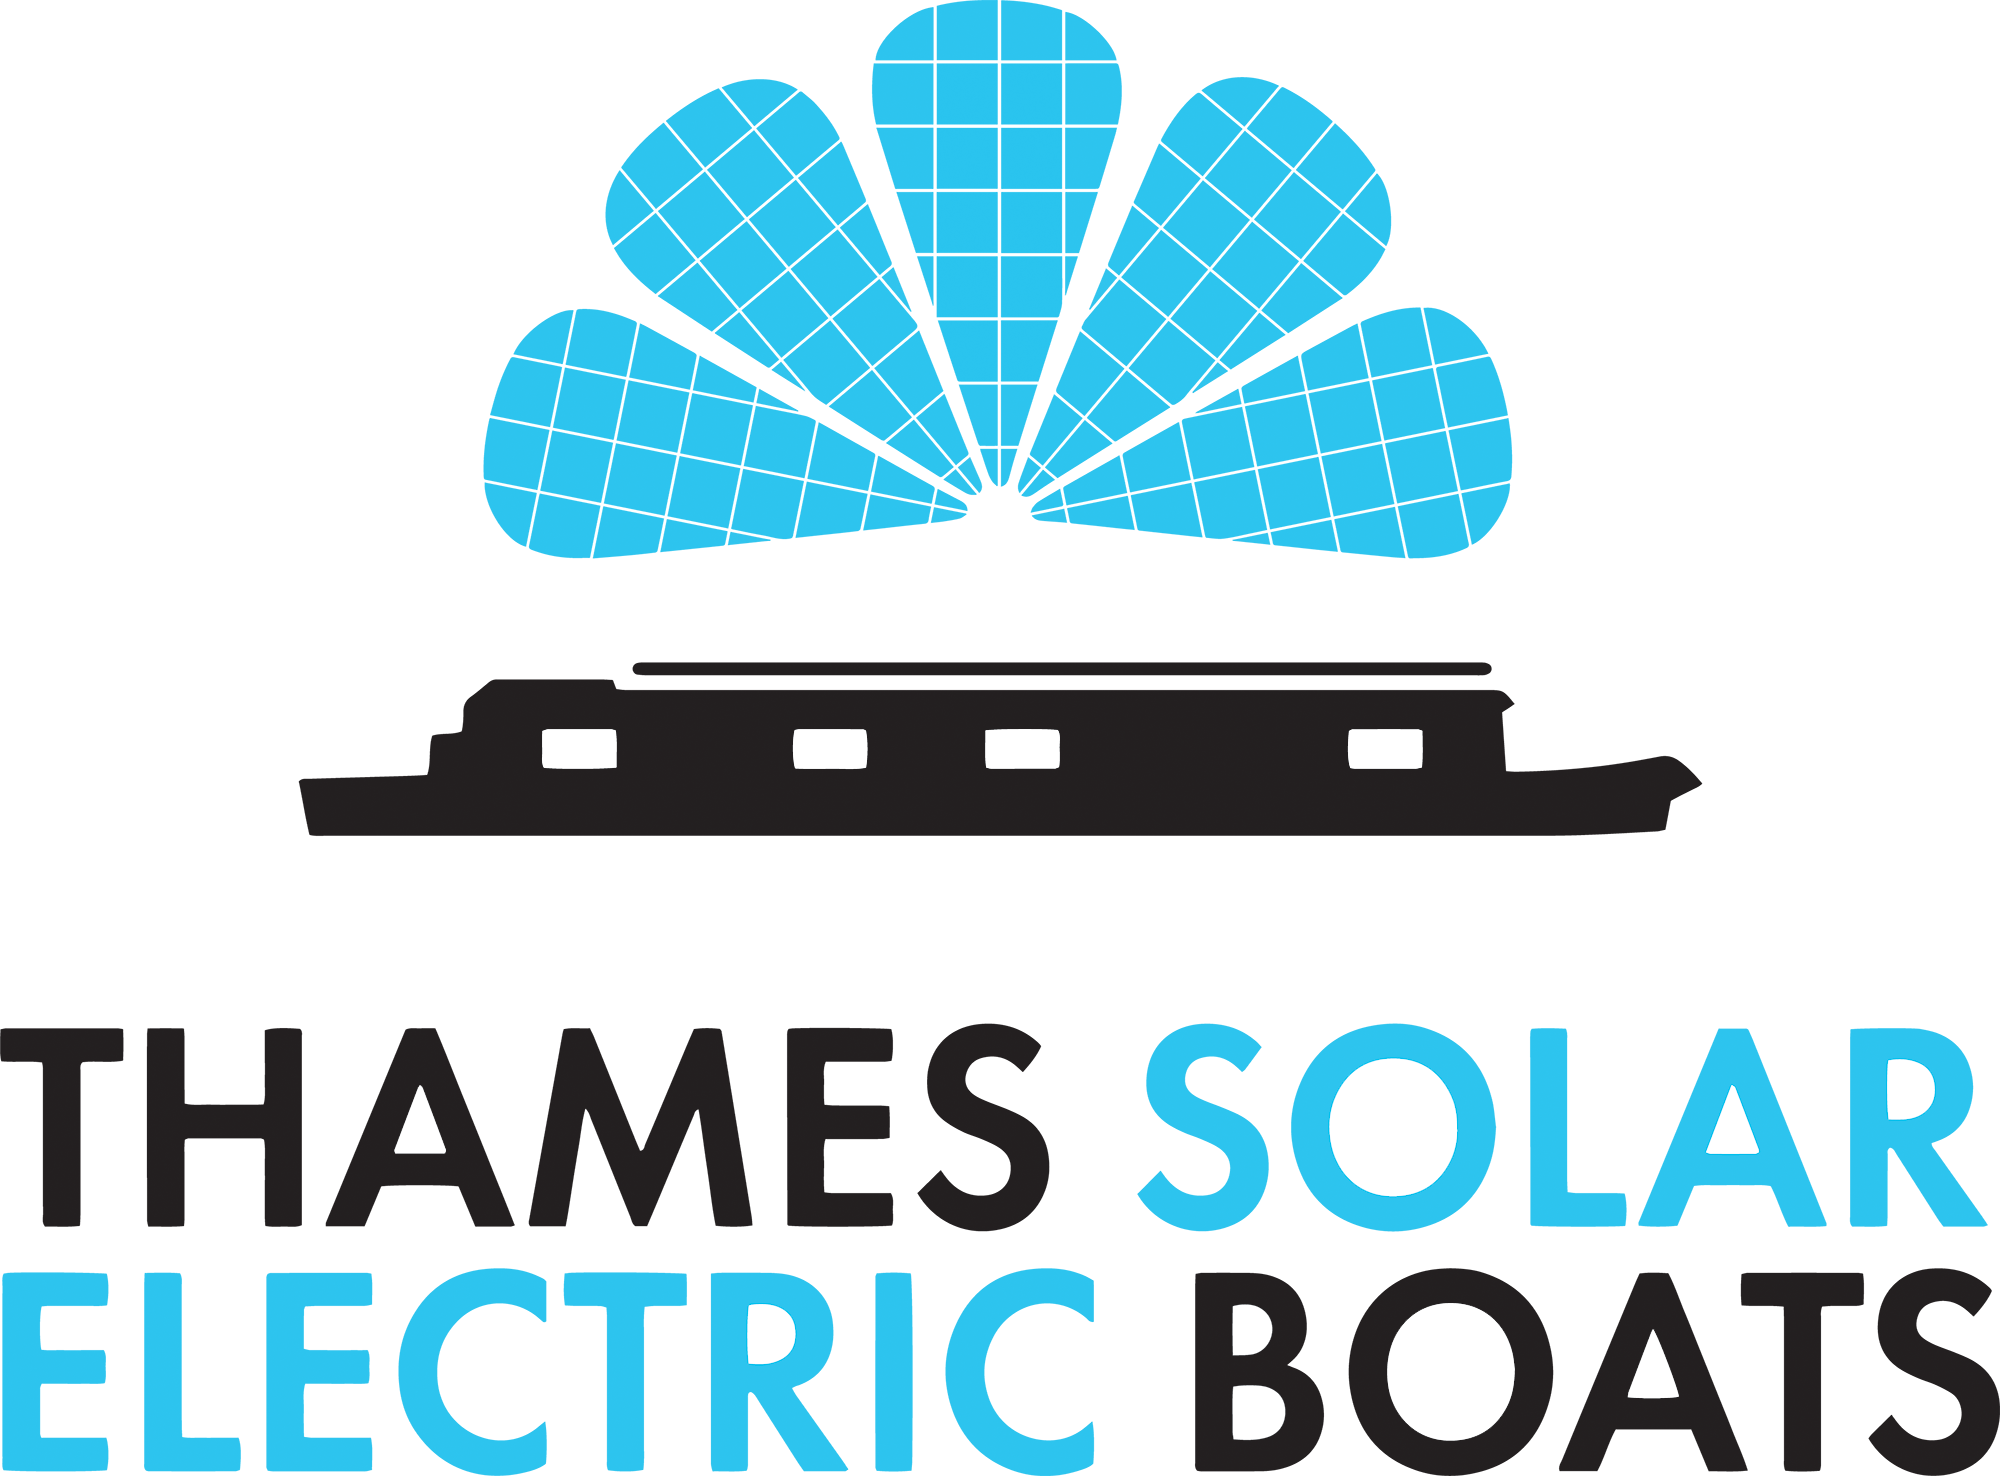 Thames Solar Electric